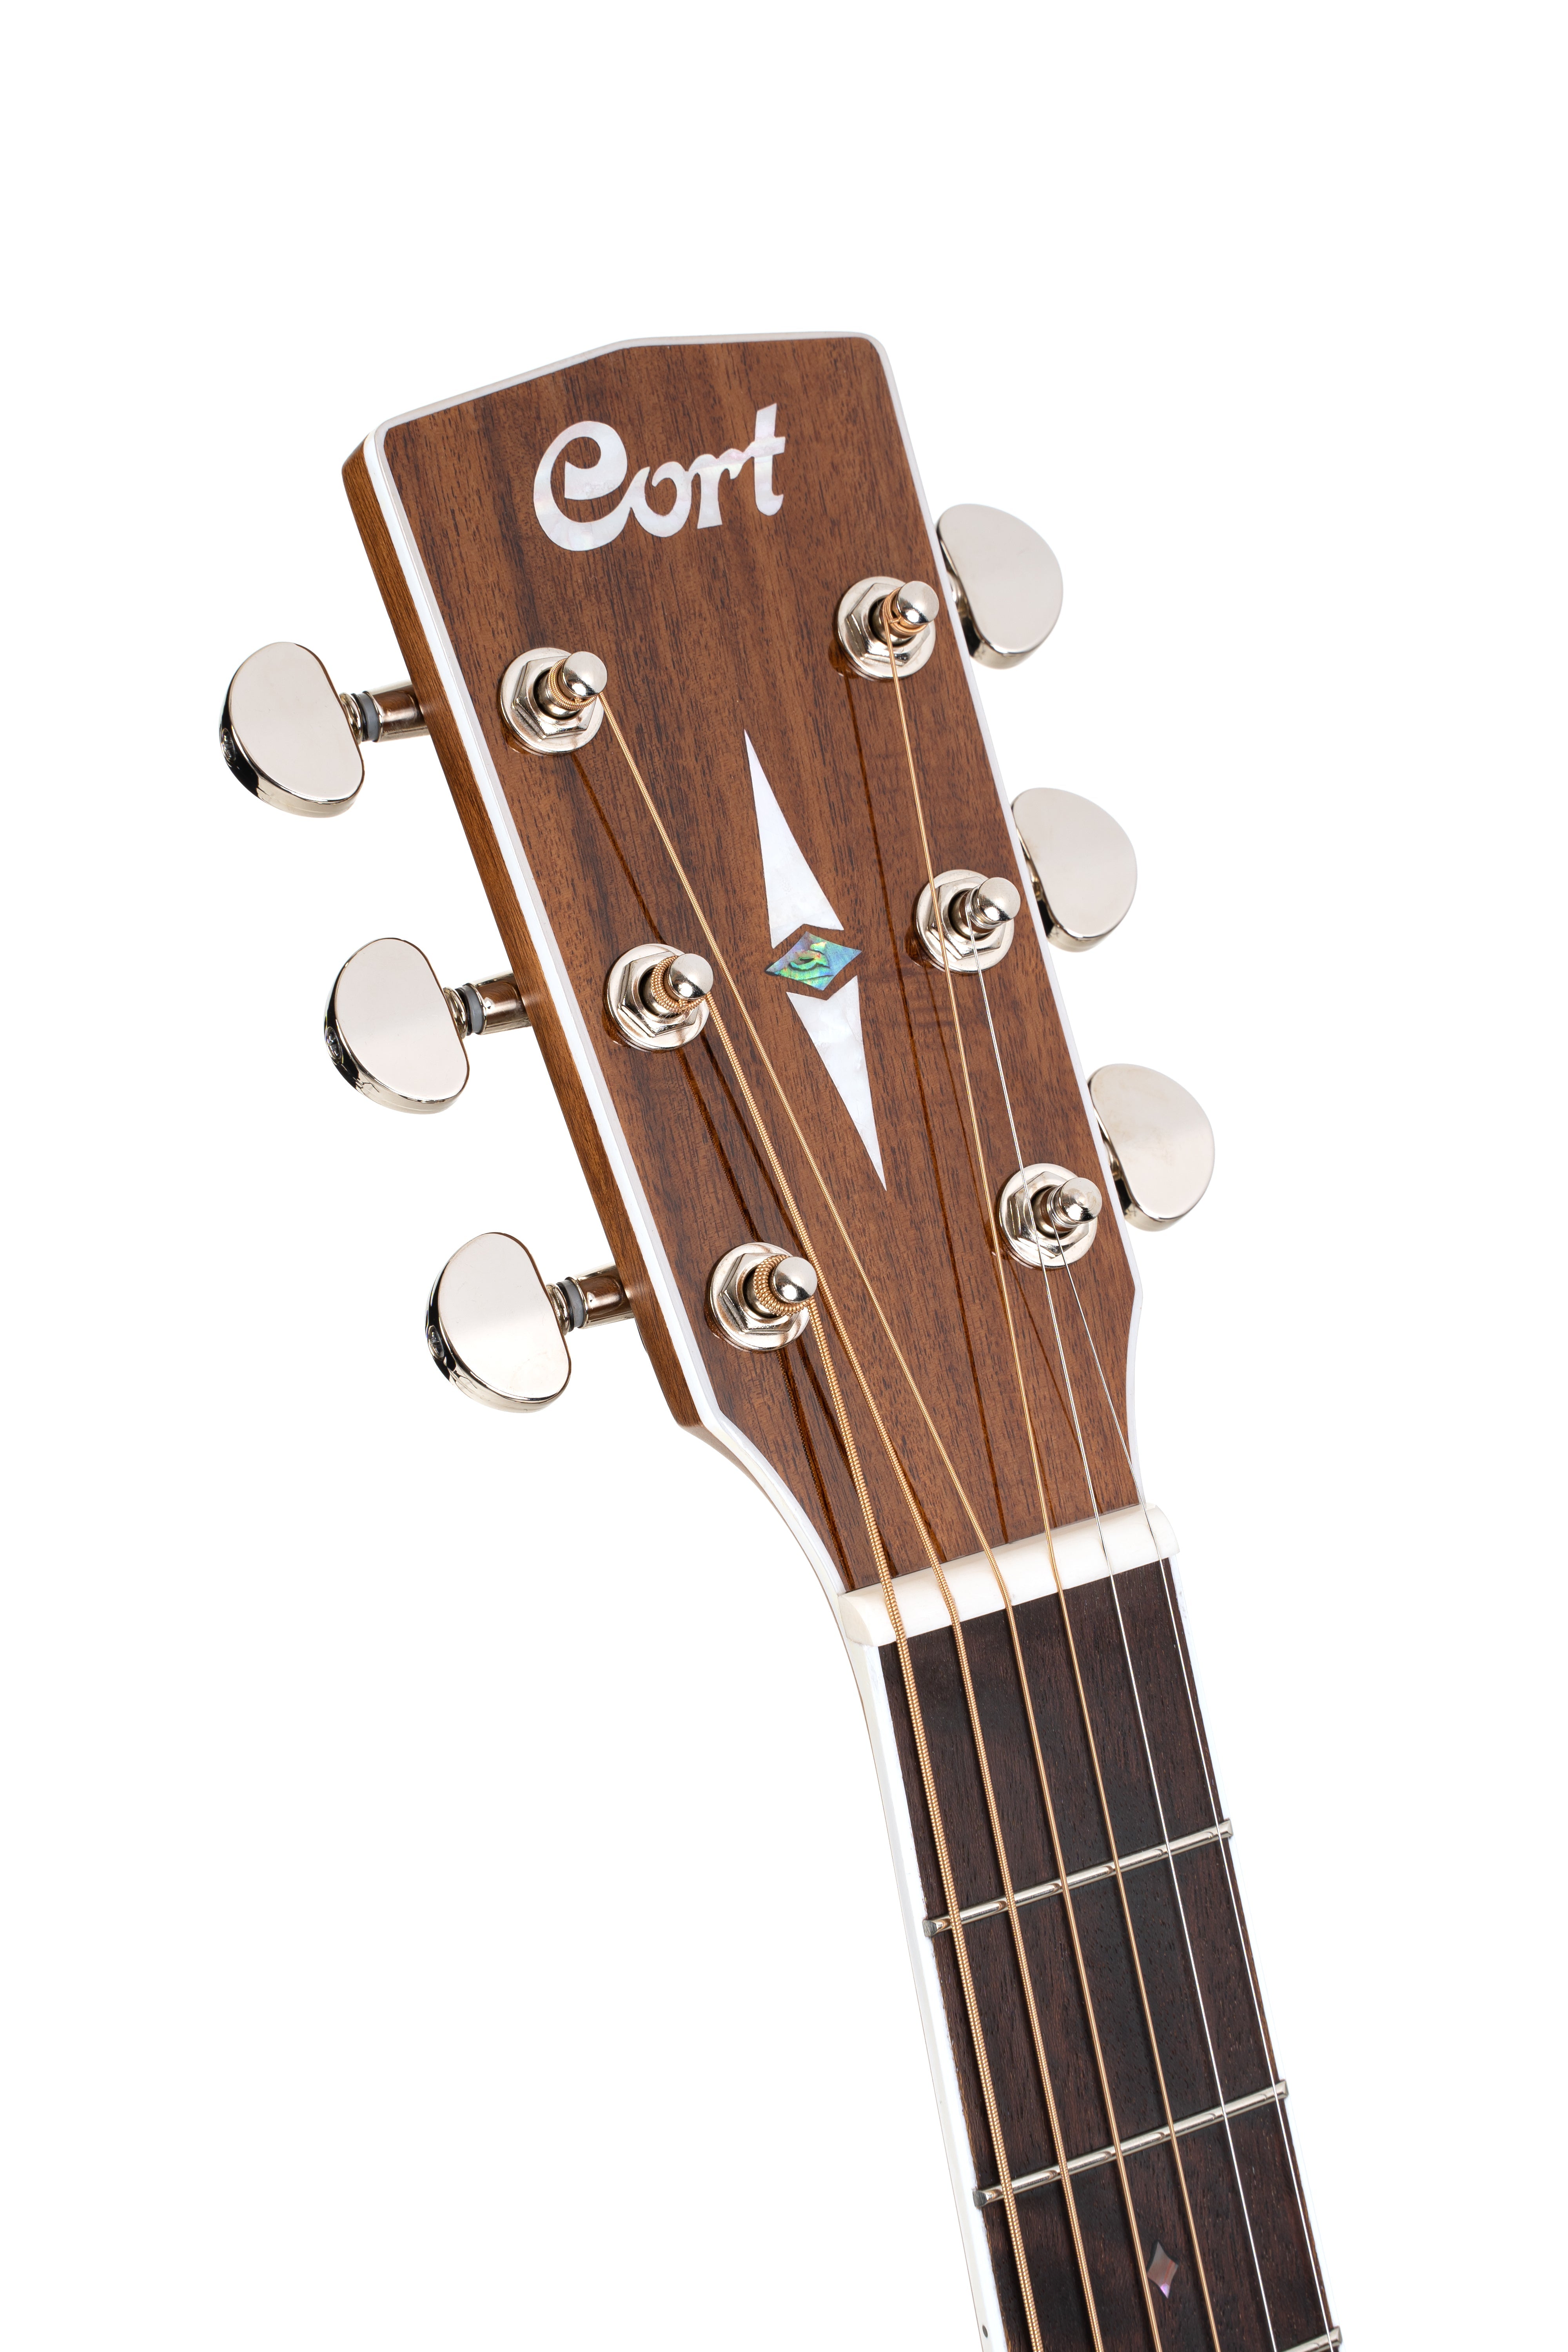 Cort Grand Regal Acoustic GA5F Koa Natural-Richards Guitars Of Stratford Upon Avon